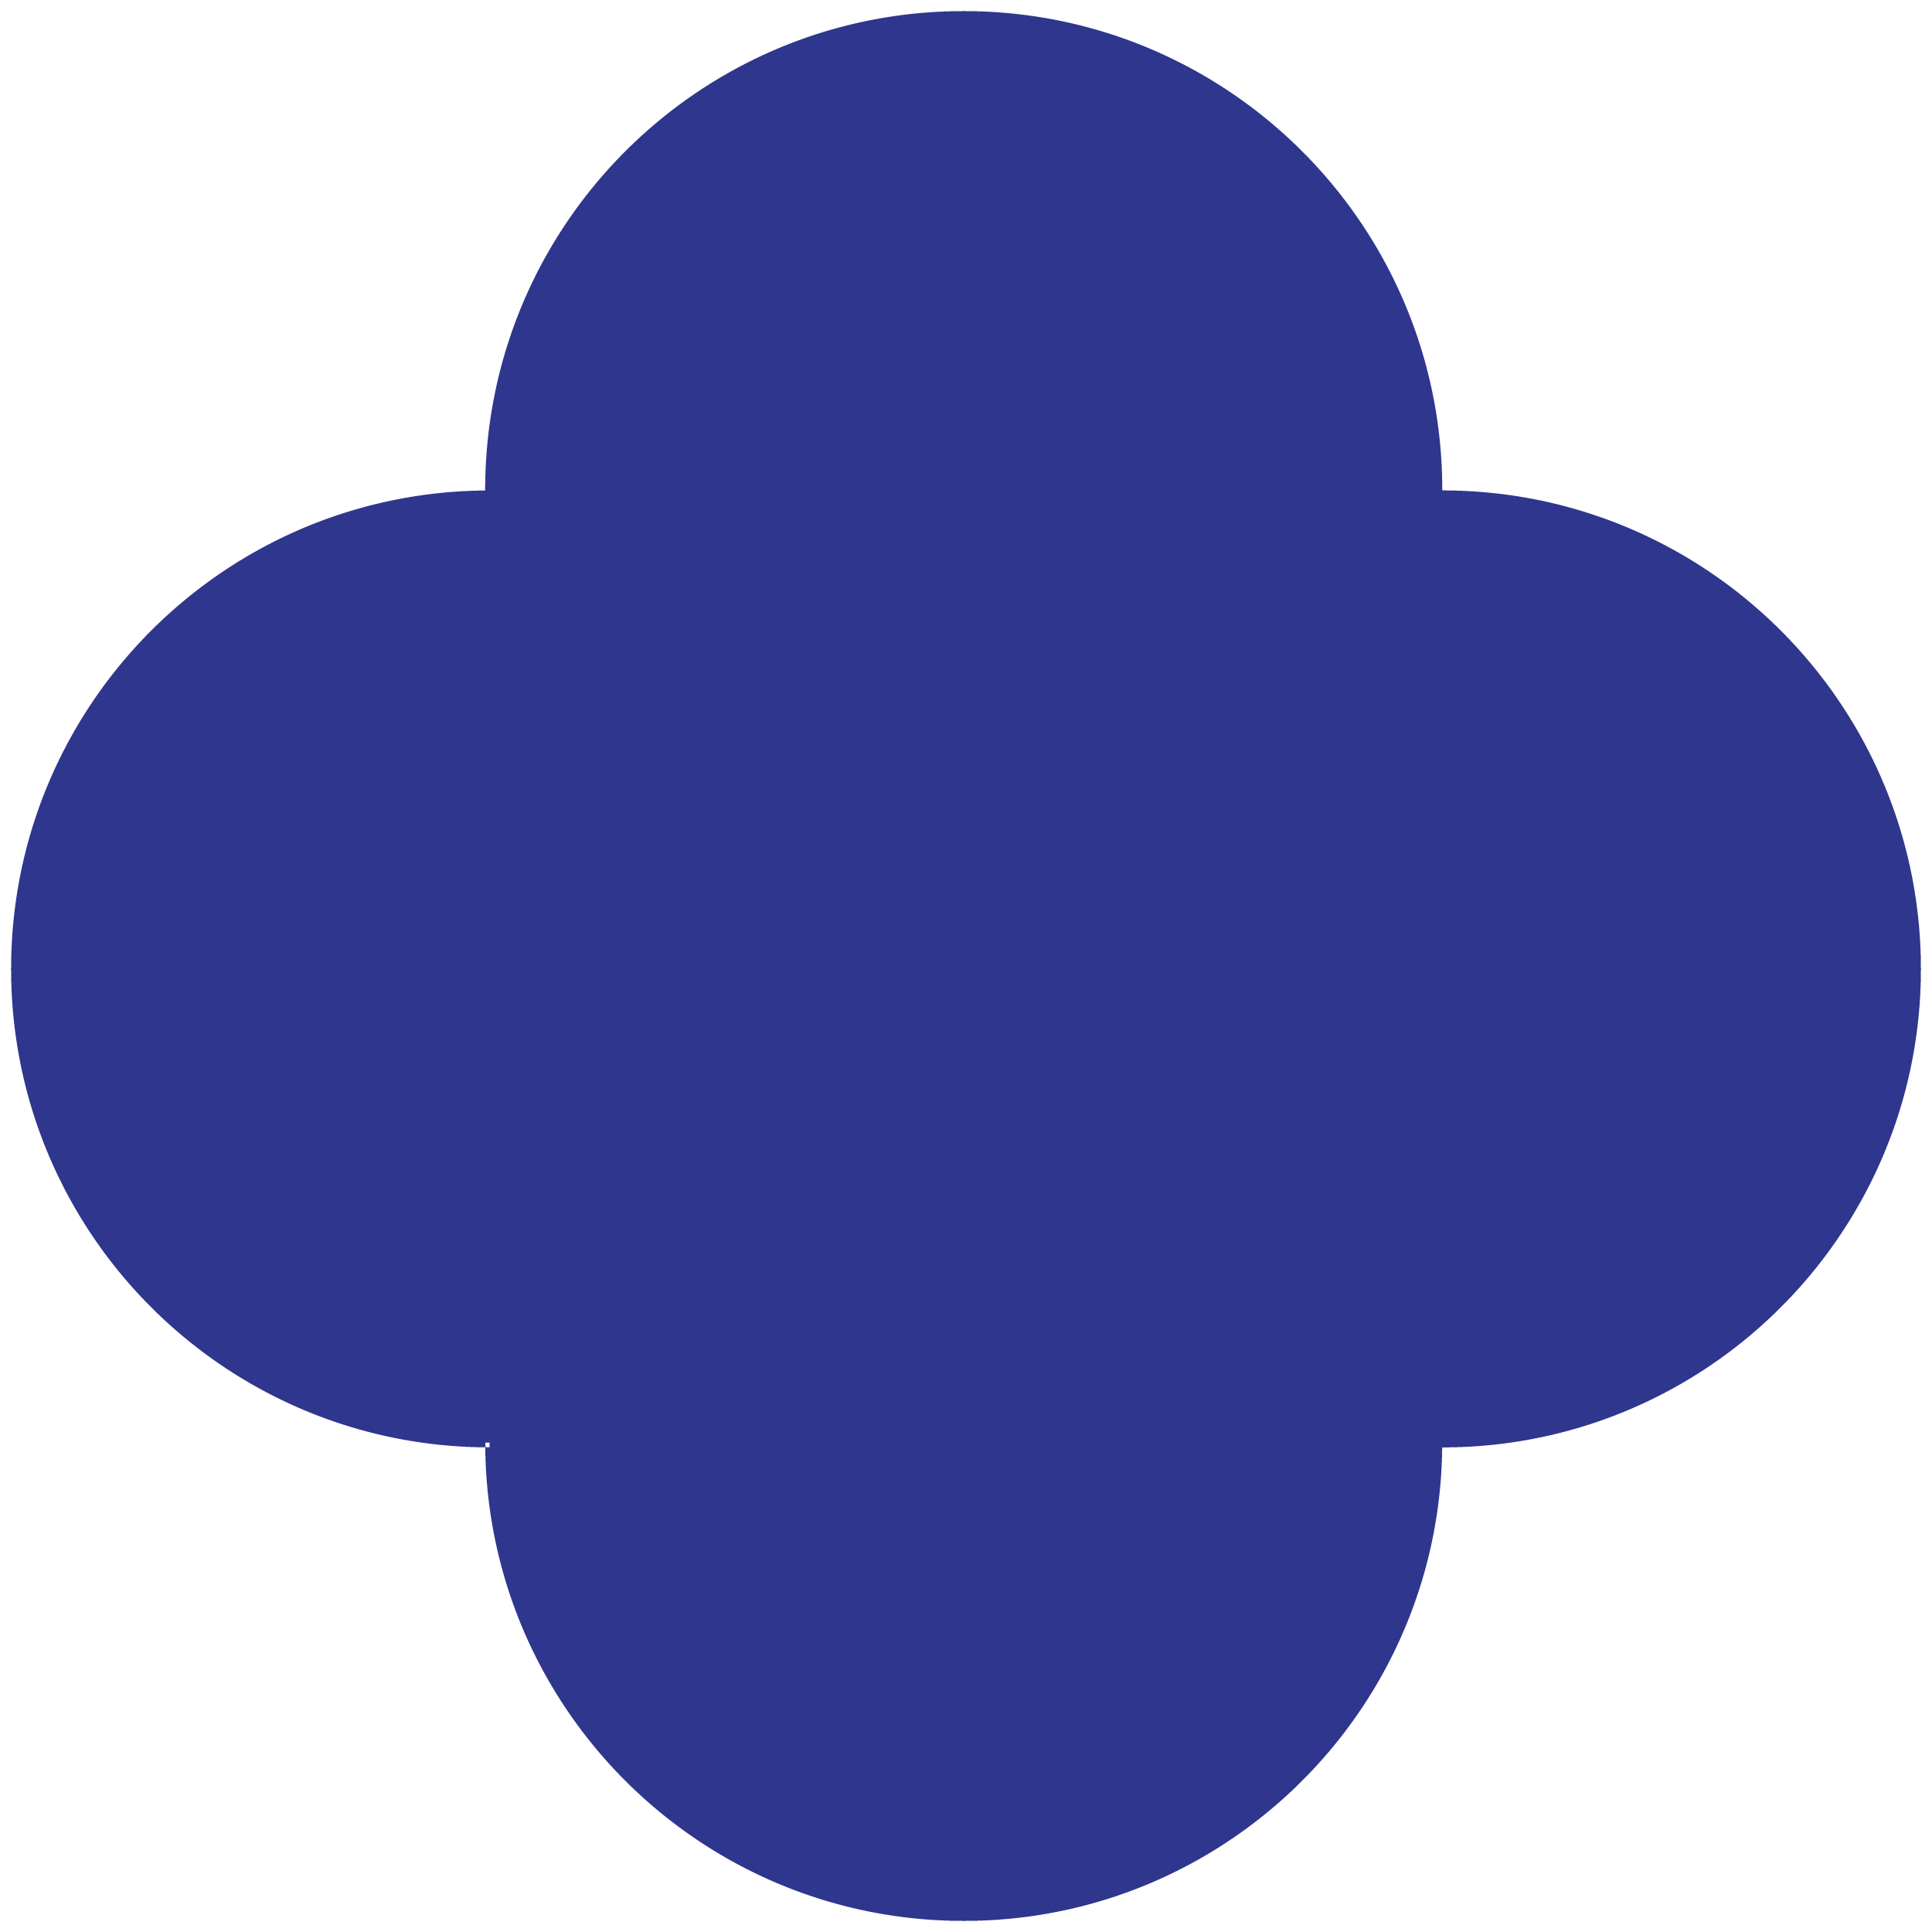 Blue flower icon